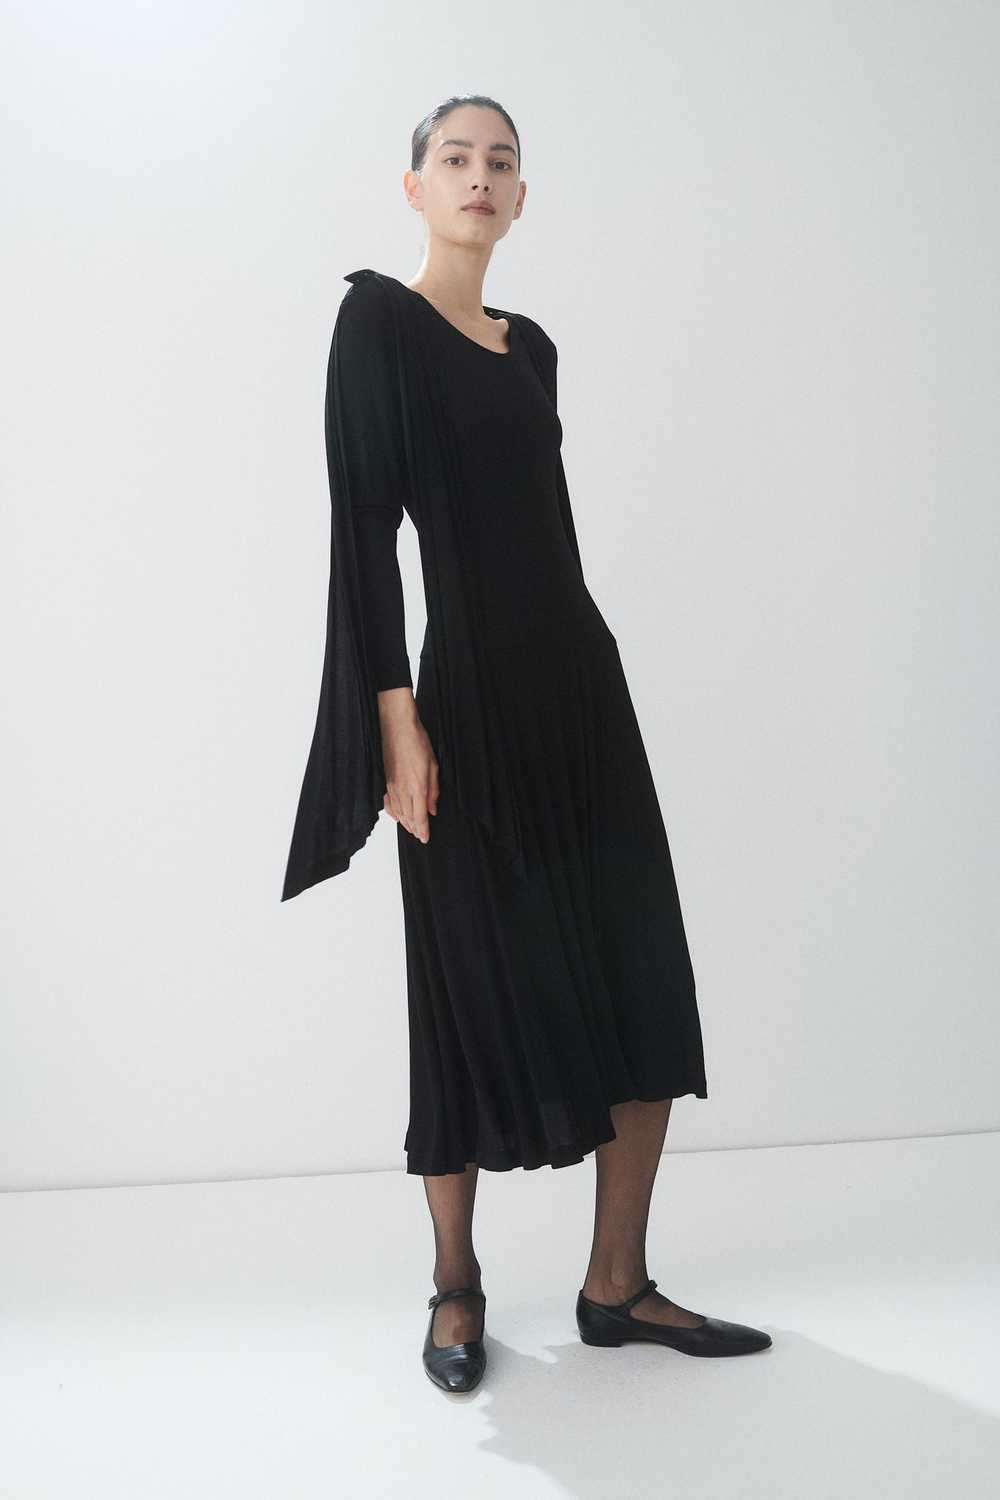 Jean Muir Black Draped Dress - image 2